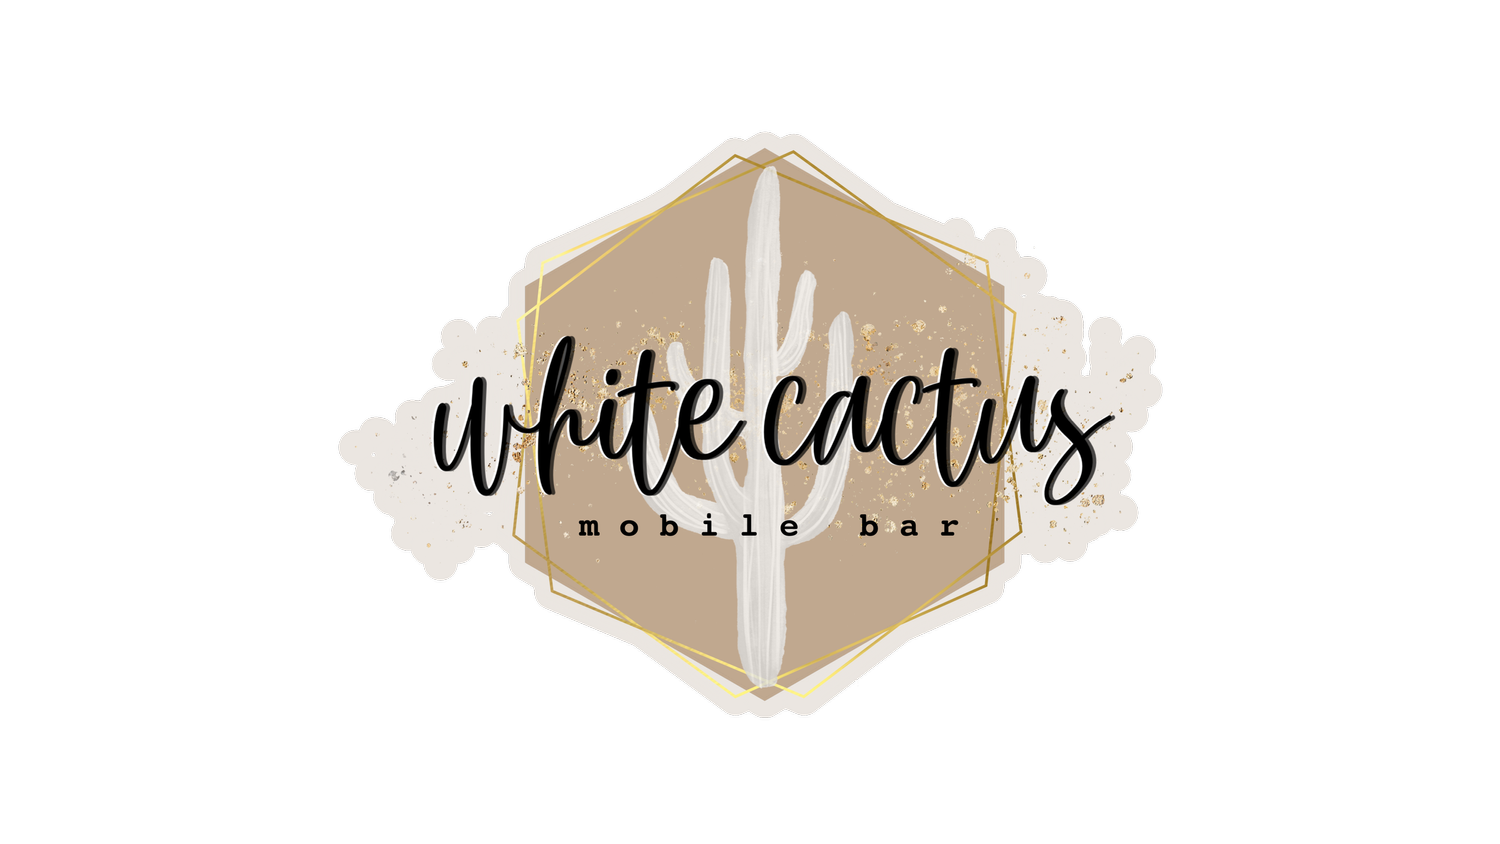 White Cactus Mobile Bar